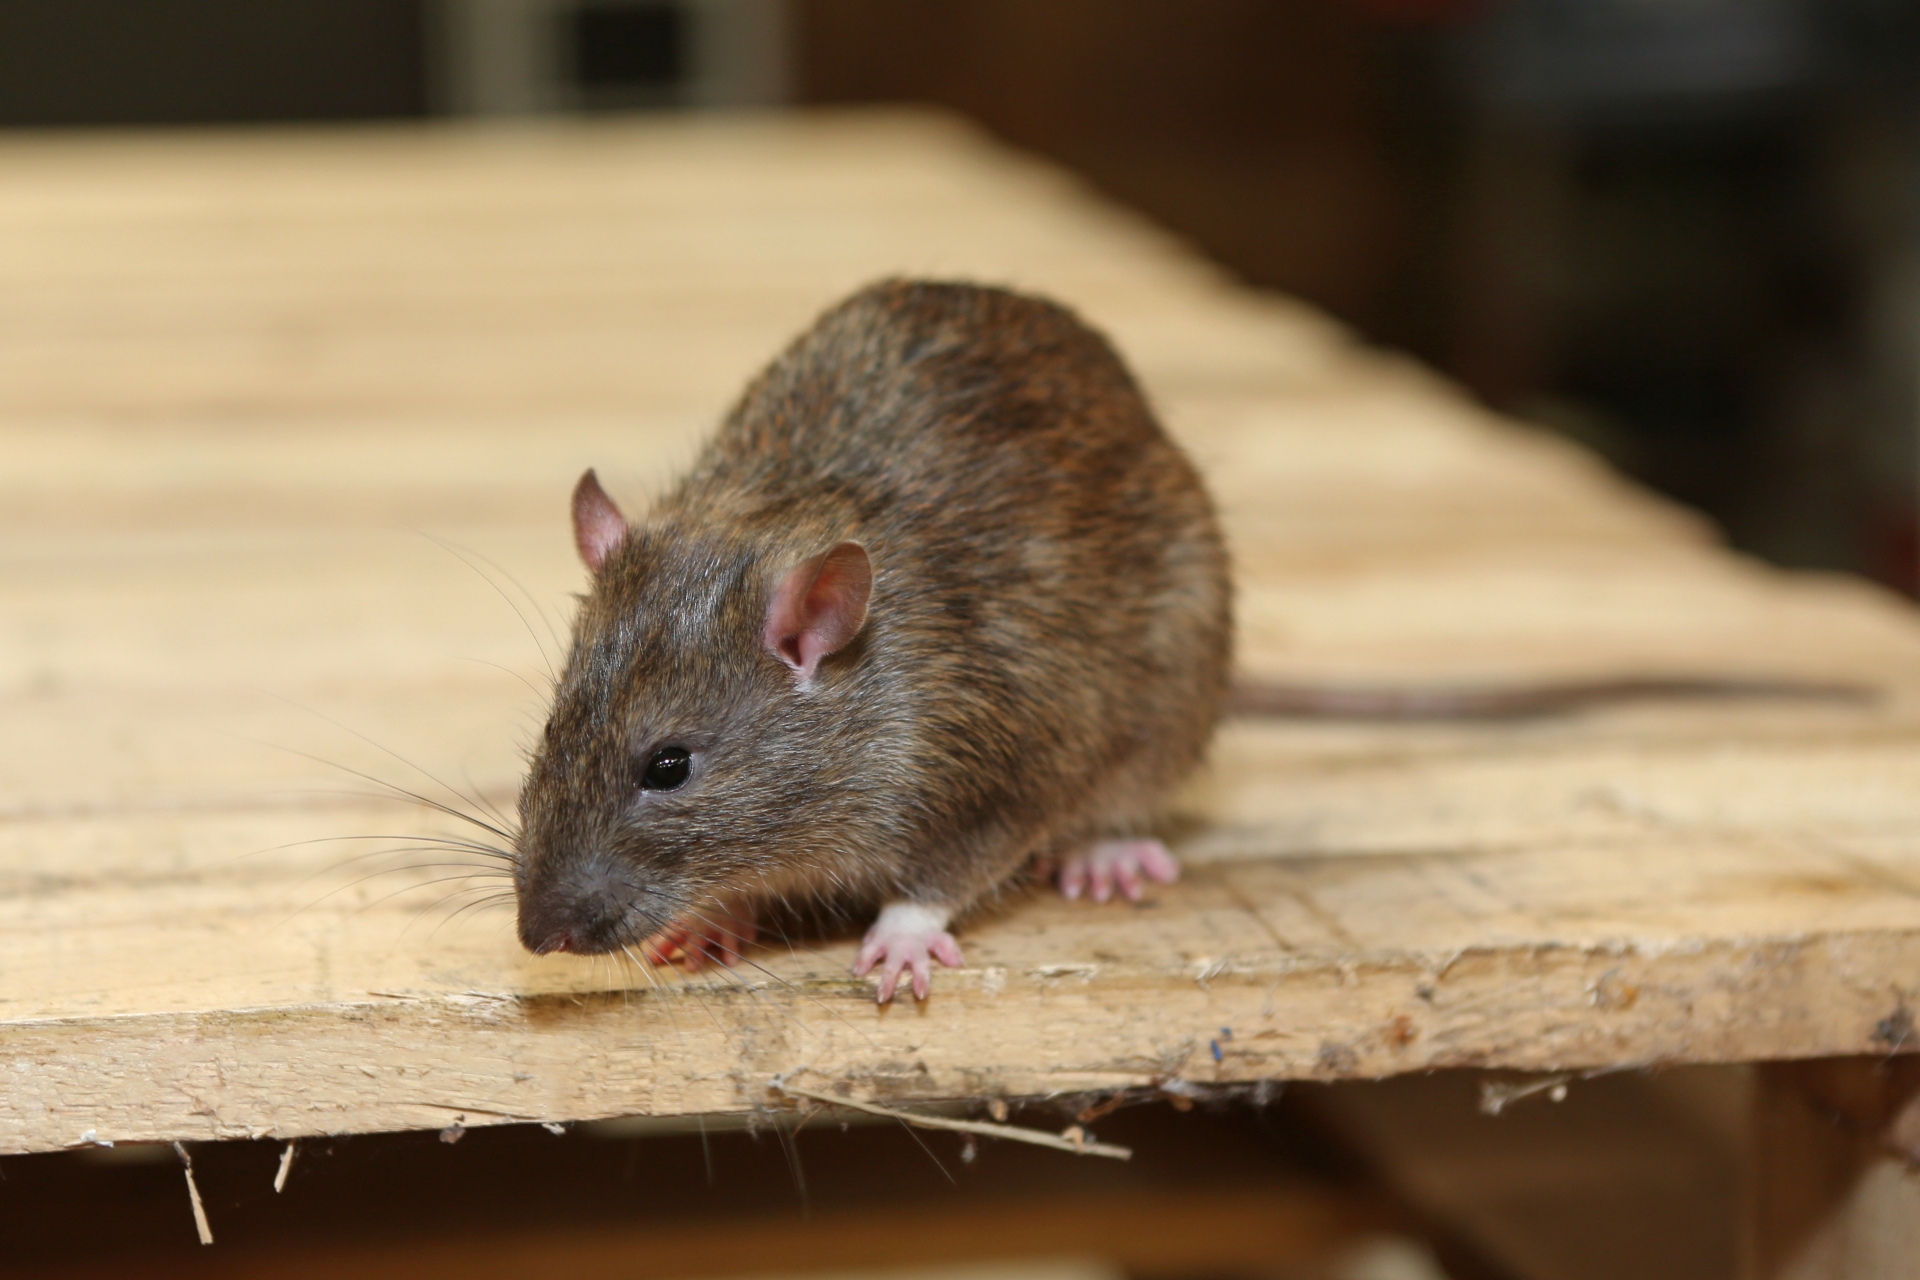 Rat extermination, Pest Control in Stratford, West Ham, E15. Call Now 020 8166 9746